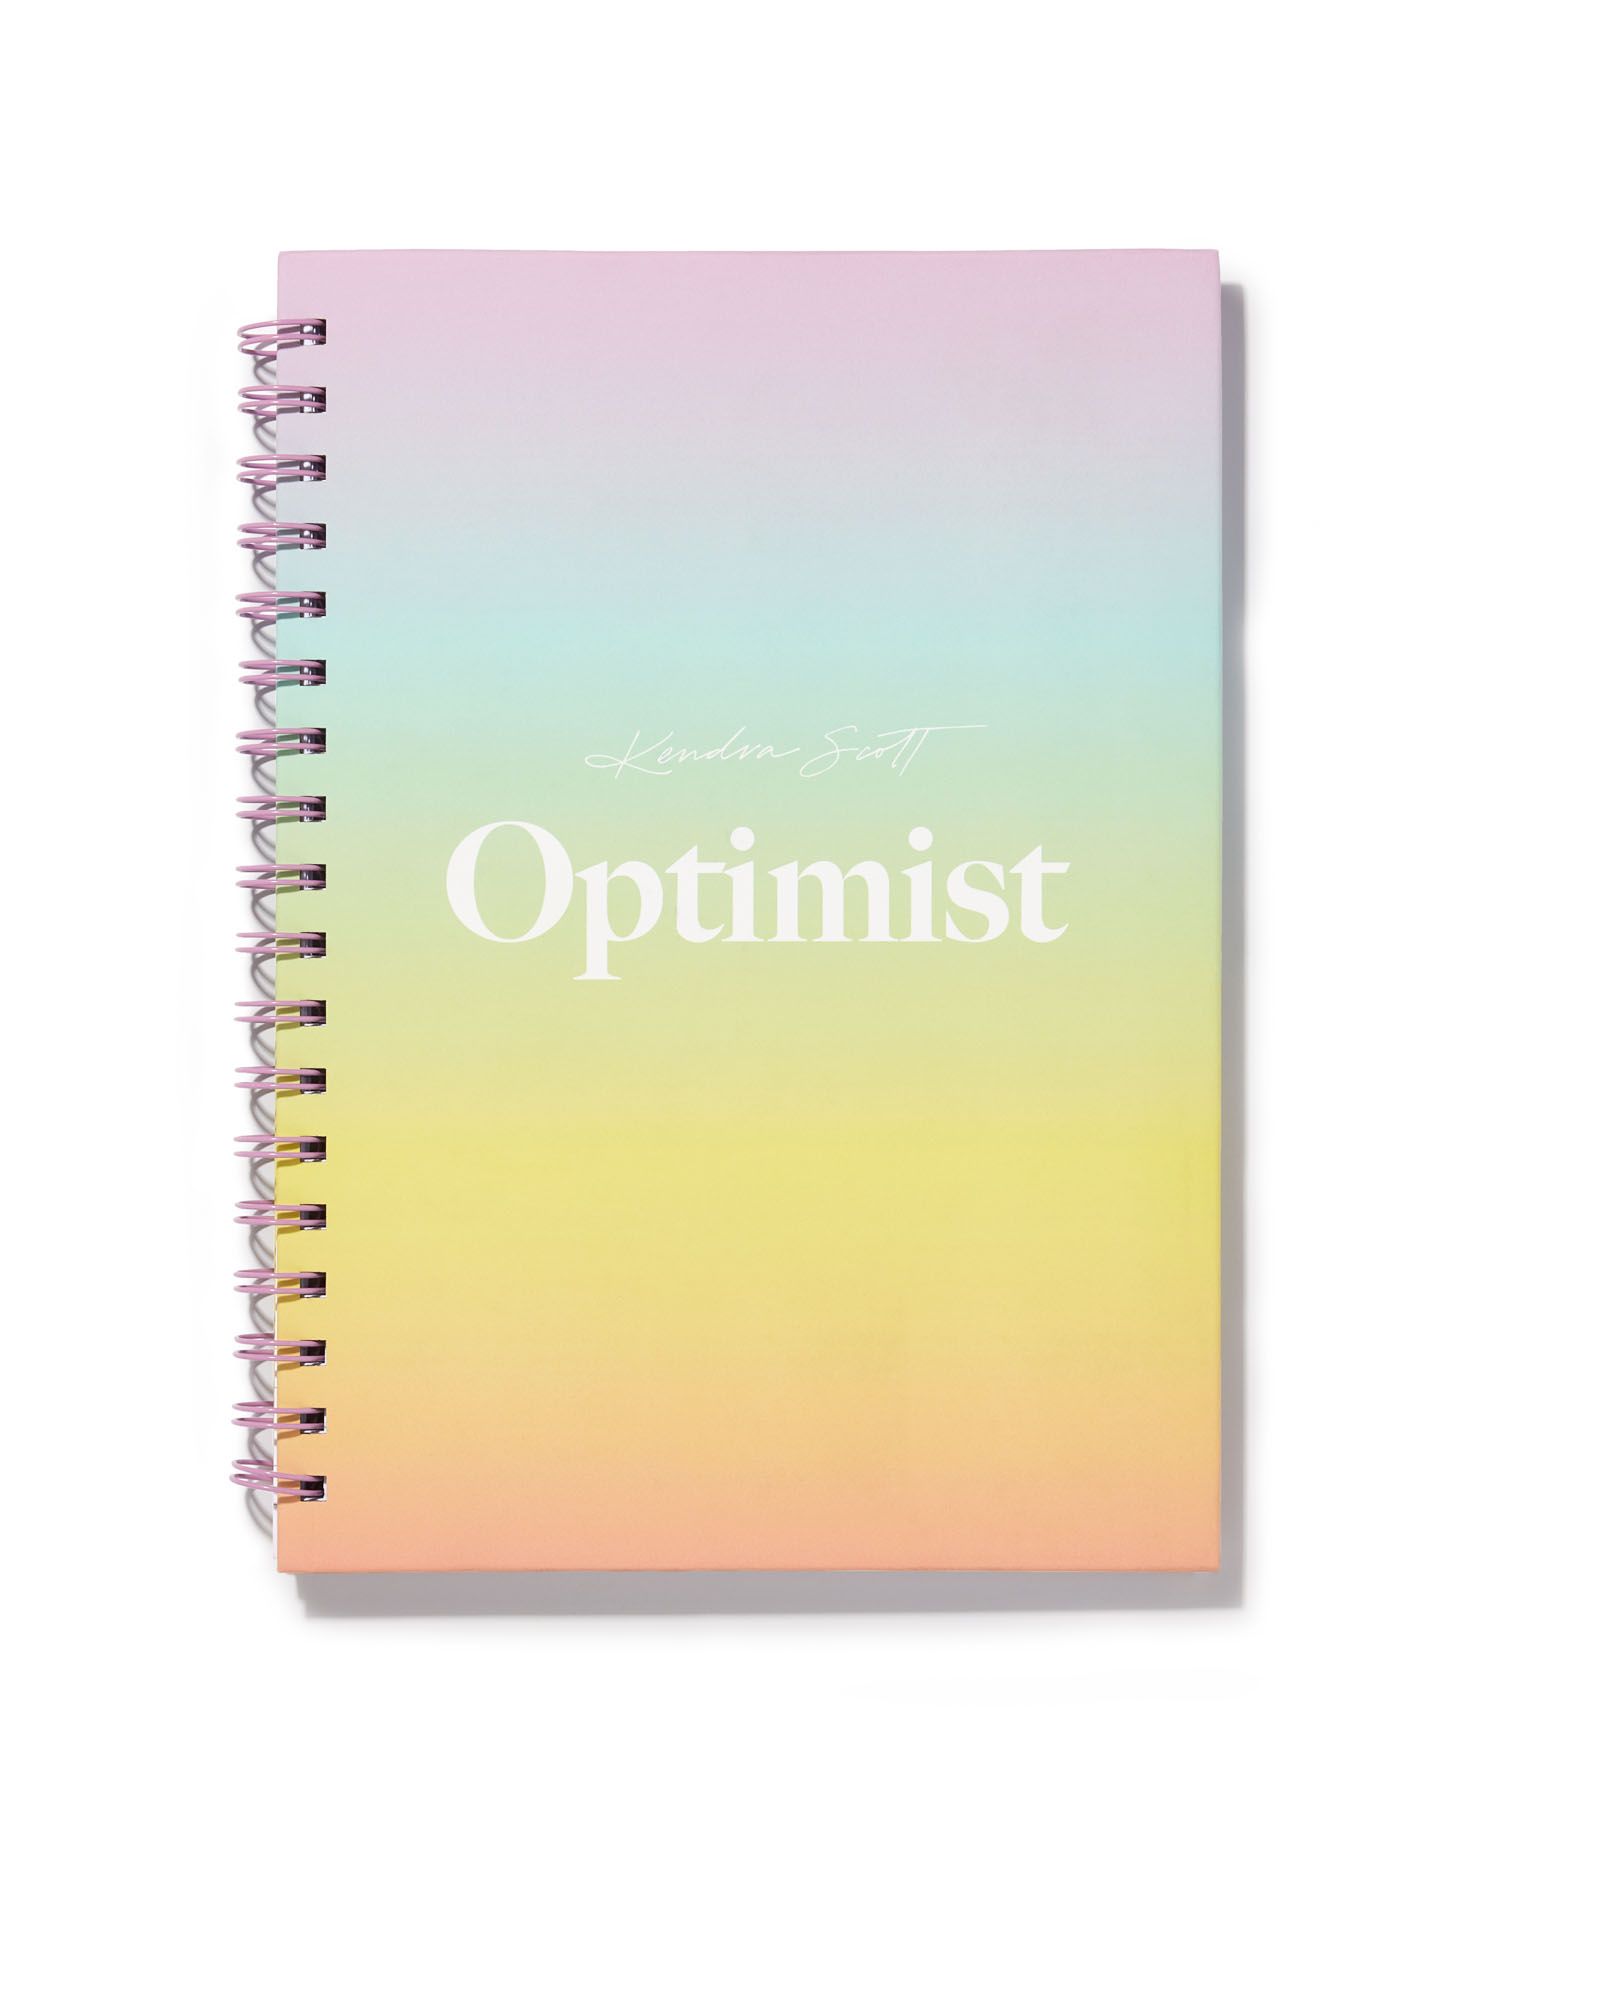 Optimist Spiral Notebook in Ombre Rainbow | Kendra Scott